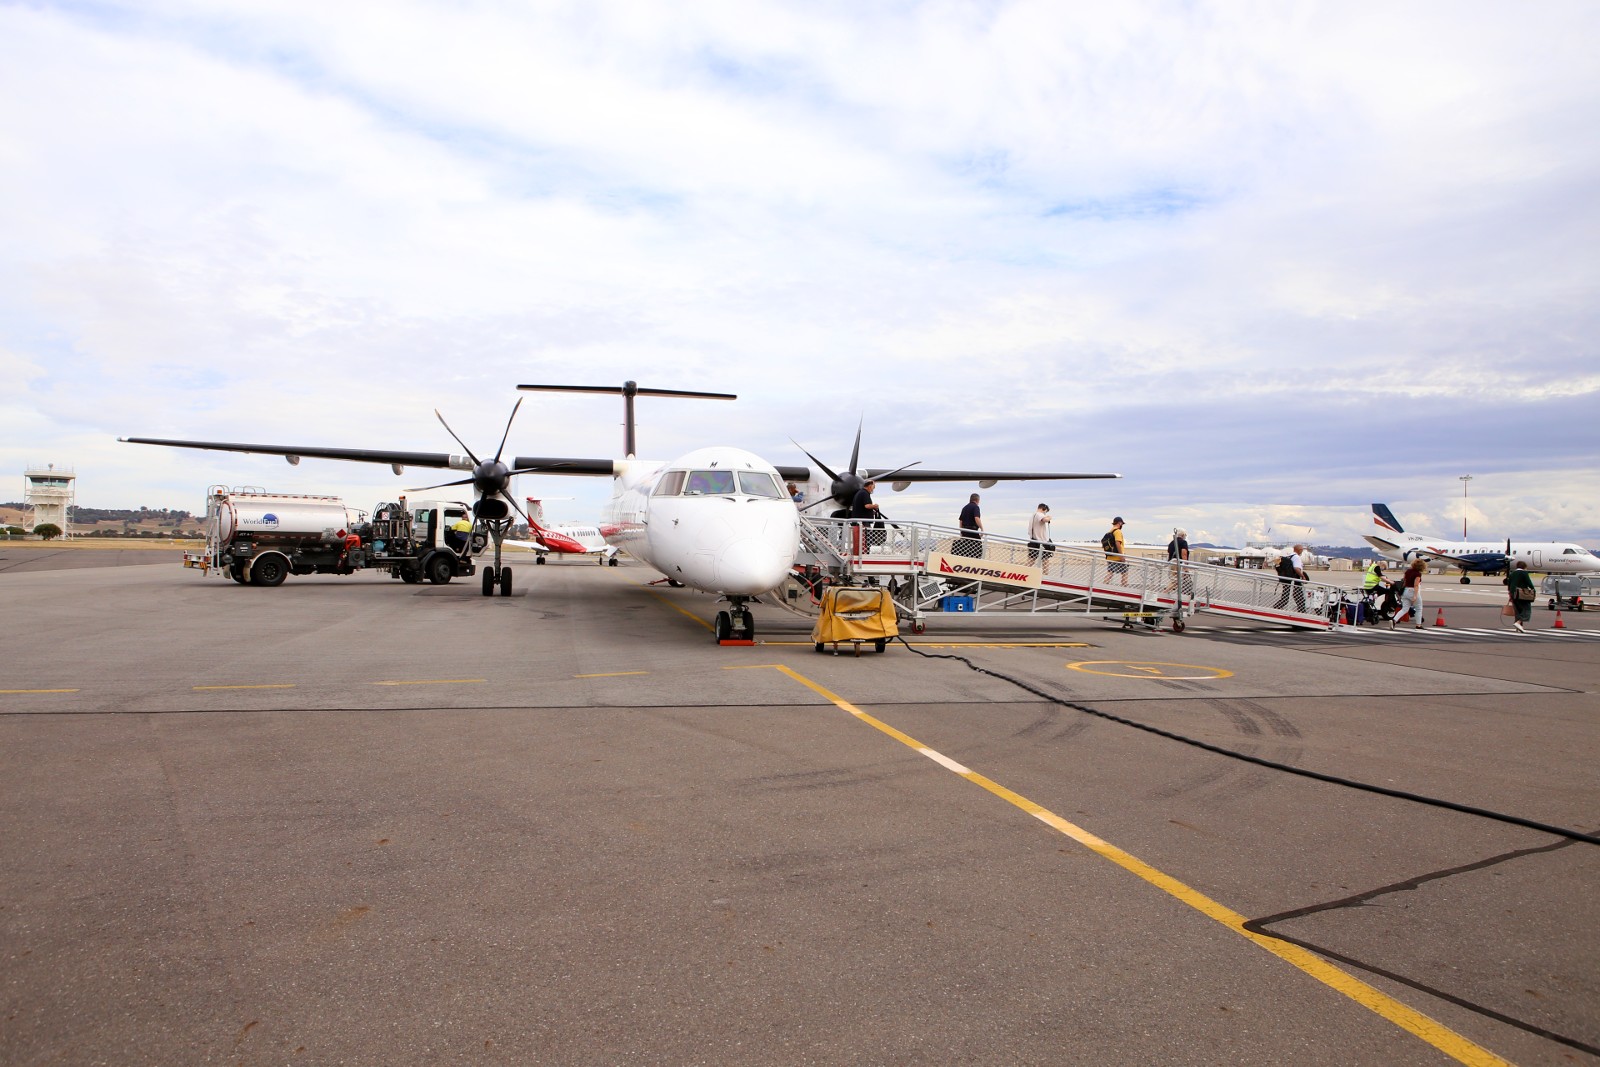 Passengers disembarking from a QantasLink aircraft on the Apron at Wagga Wagga Airport